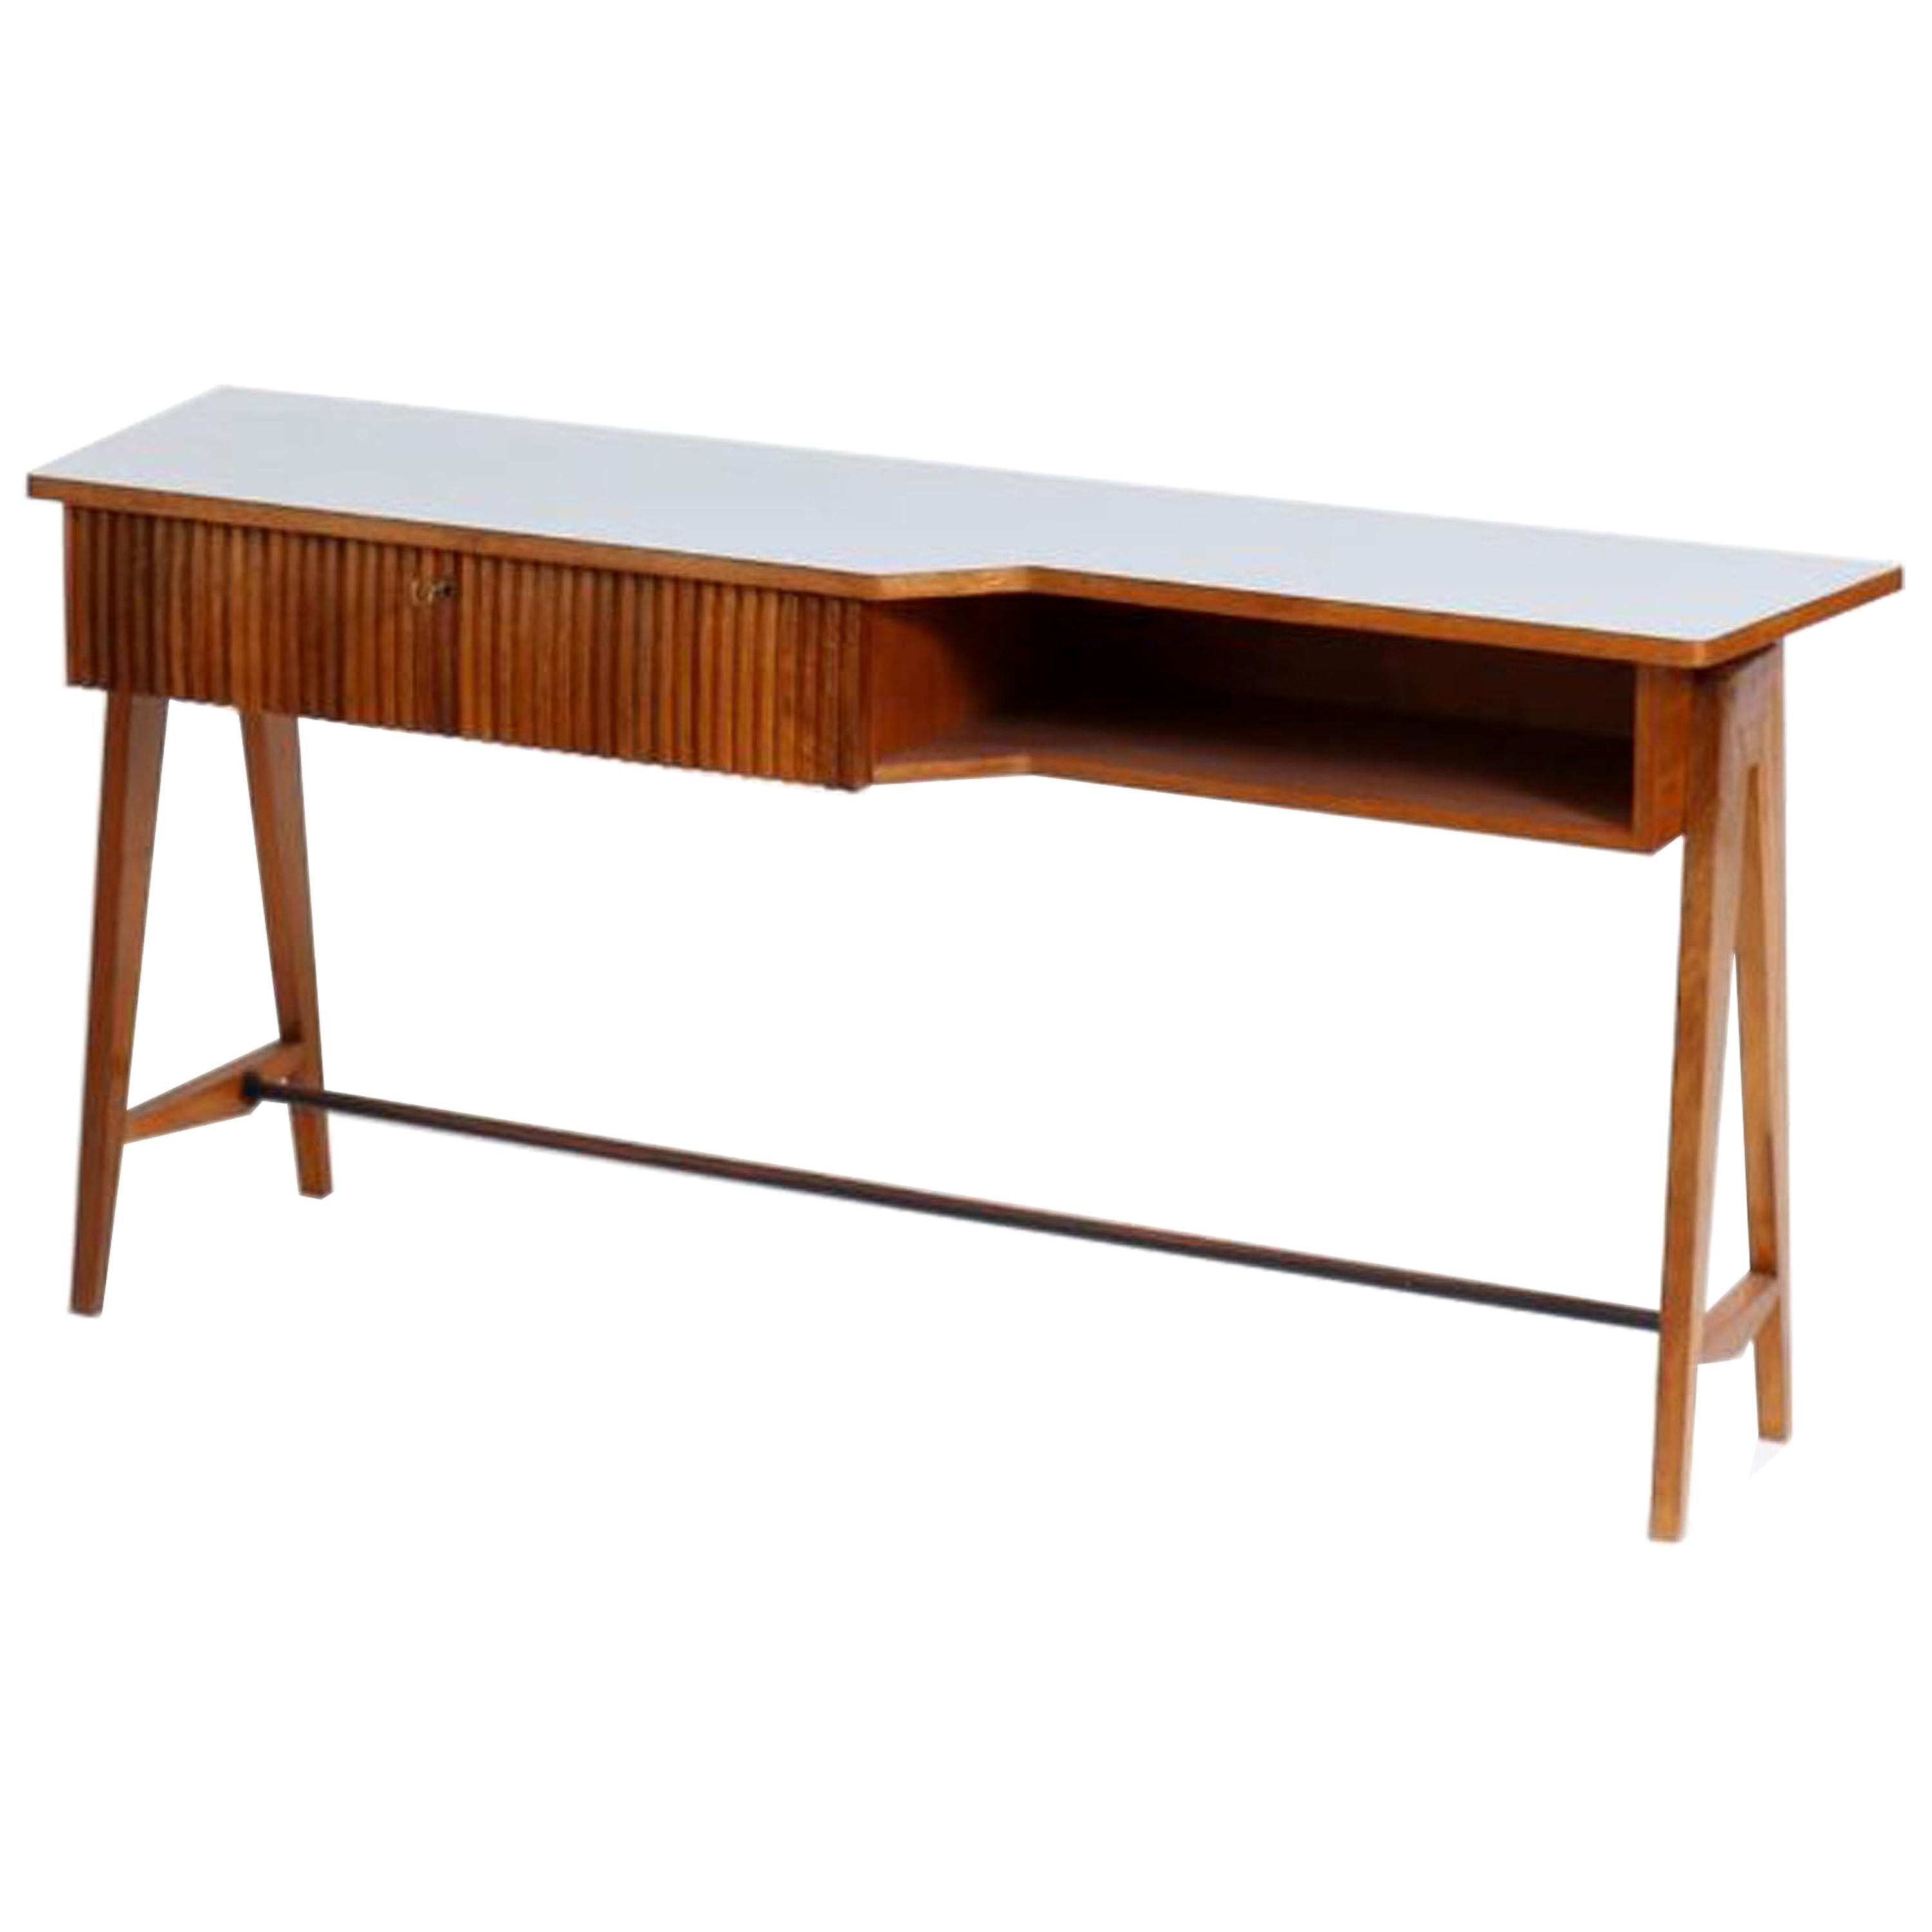 Ico Parisi Mid-Century Modern Rectangular Walnut Mahogany Wood Desk, Italy, 1950